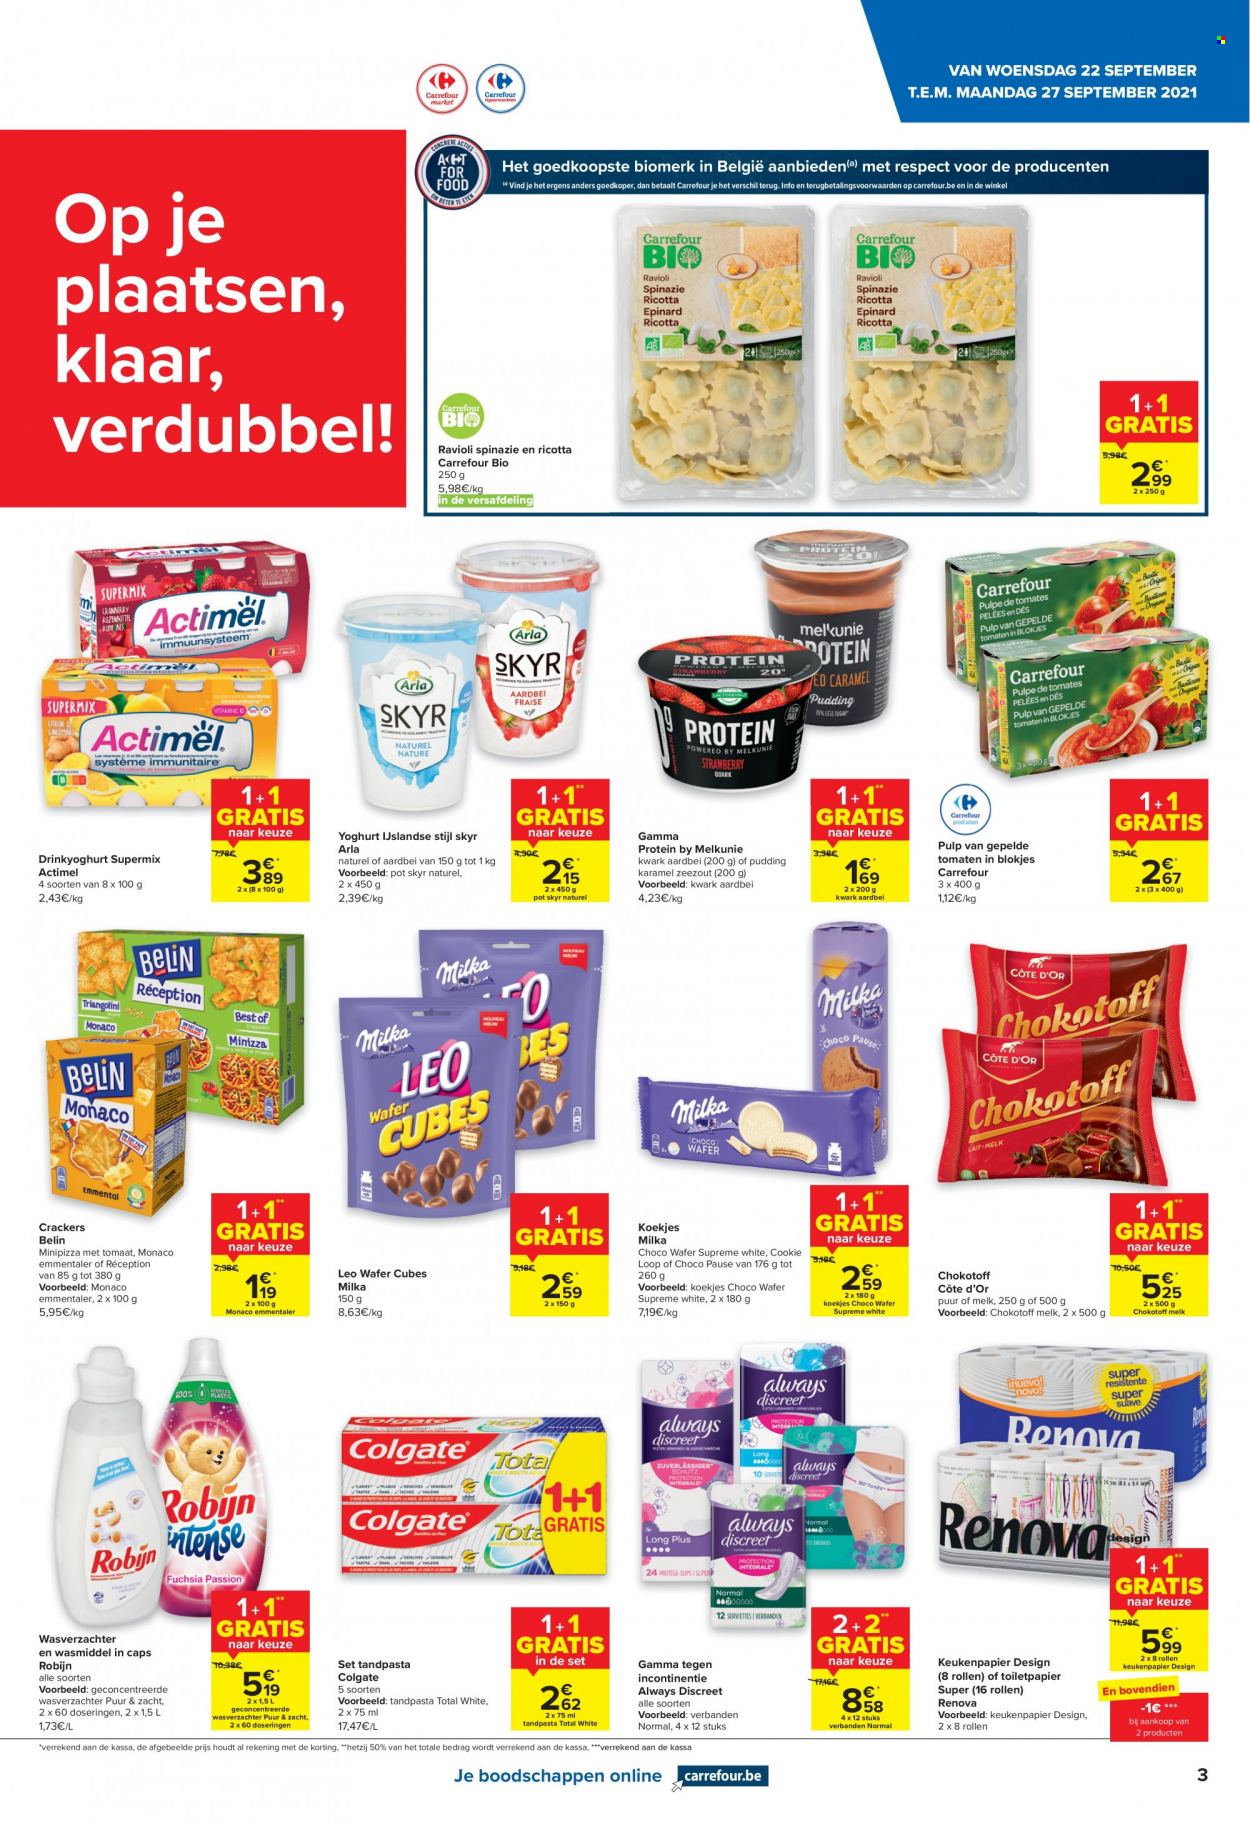 thumbnail - Catalogue Carrefour - 22/09/2021 - 27/09/2021 - Produits soldés - ravioli, yaourt, Milka, skyr, Actimel, Côte d'Or, crackers, Colgate, Always, Discreet, ricotta. Page 3.